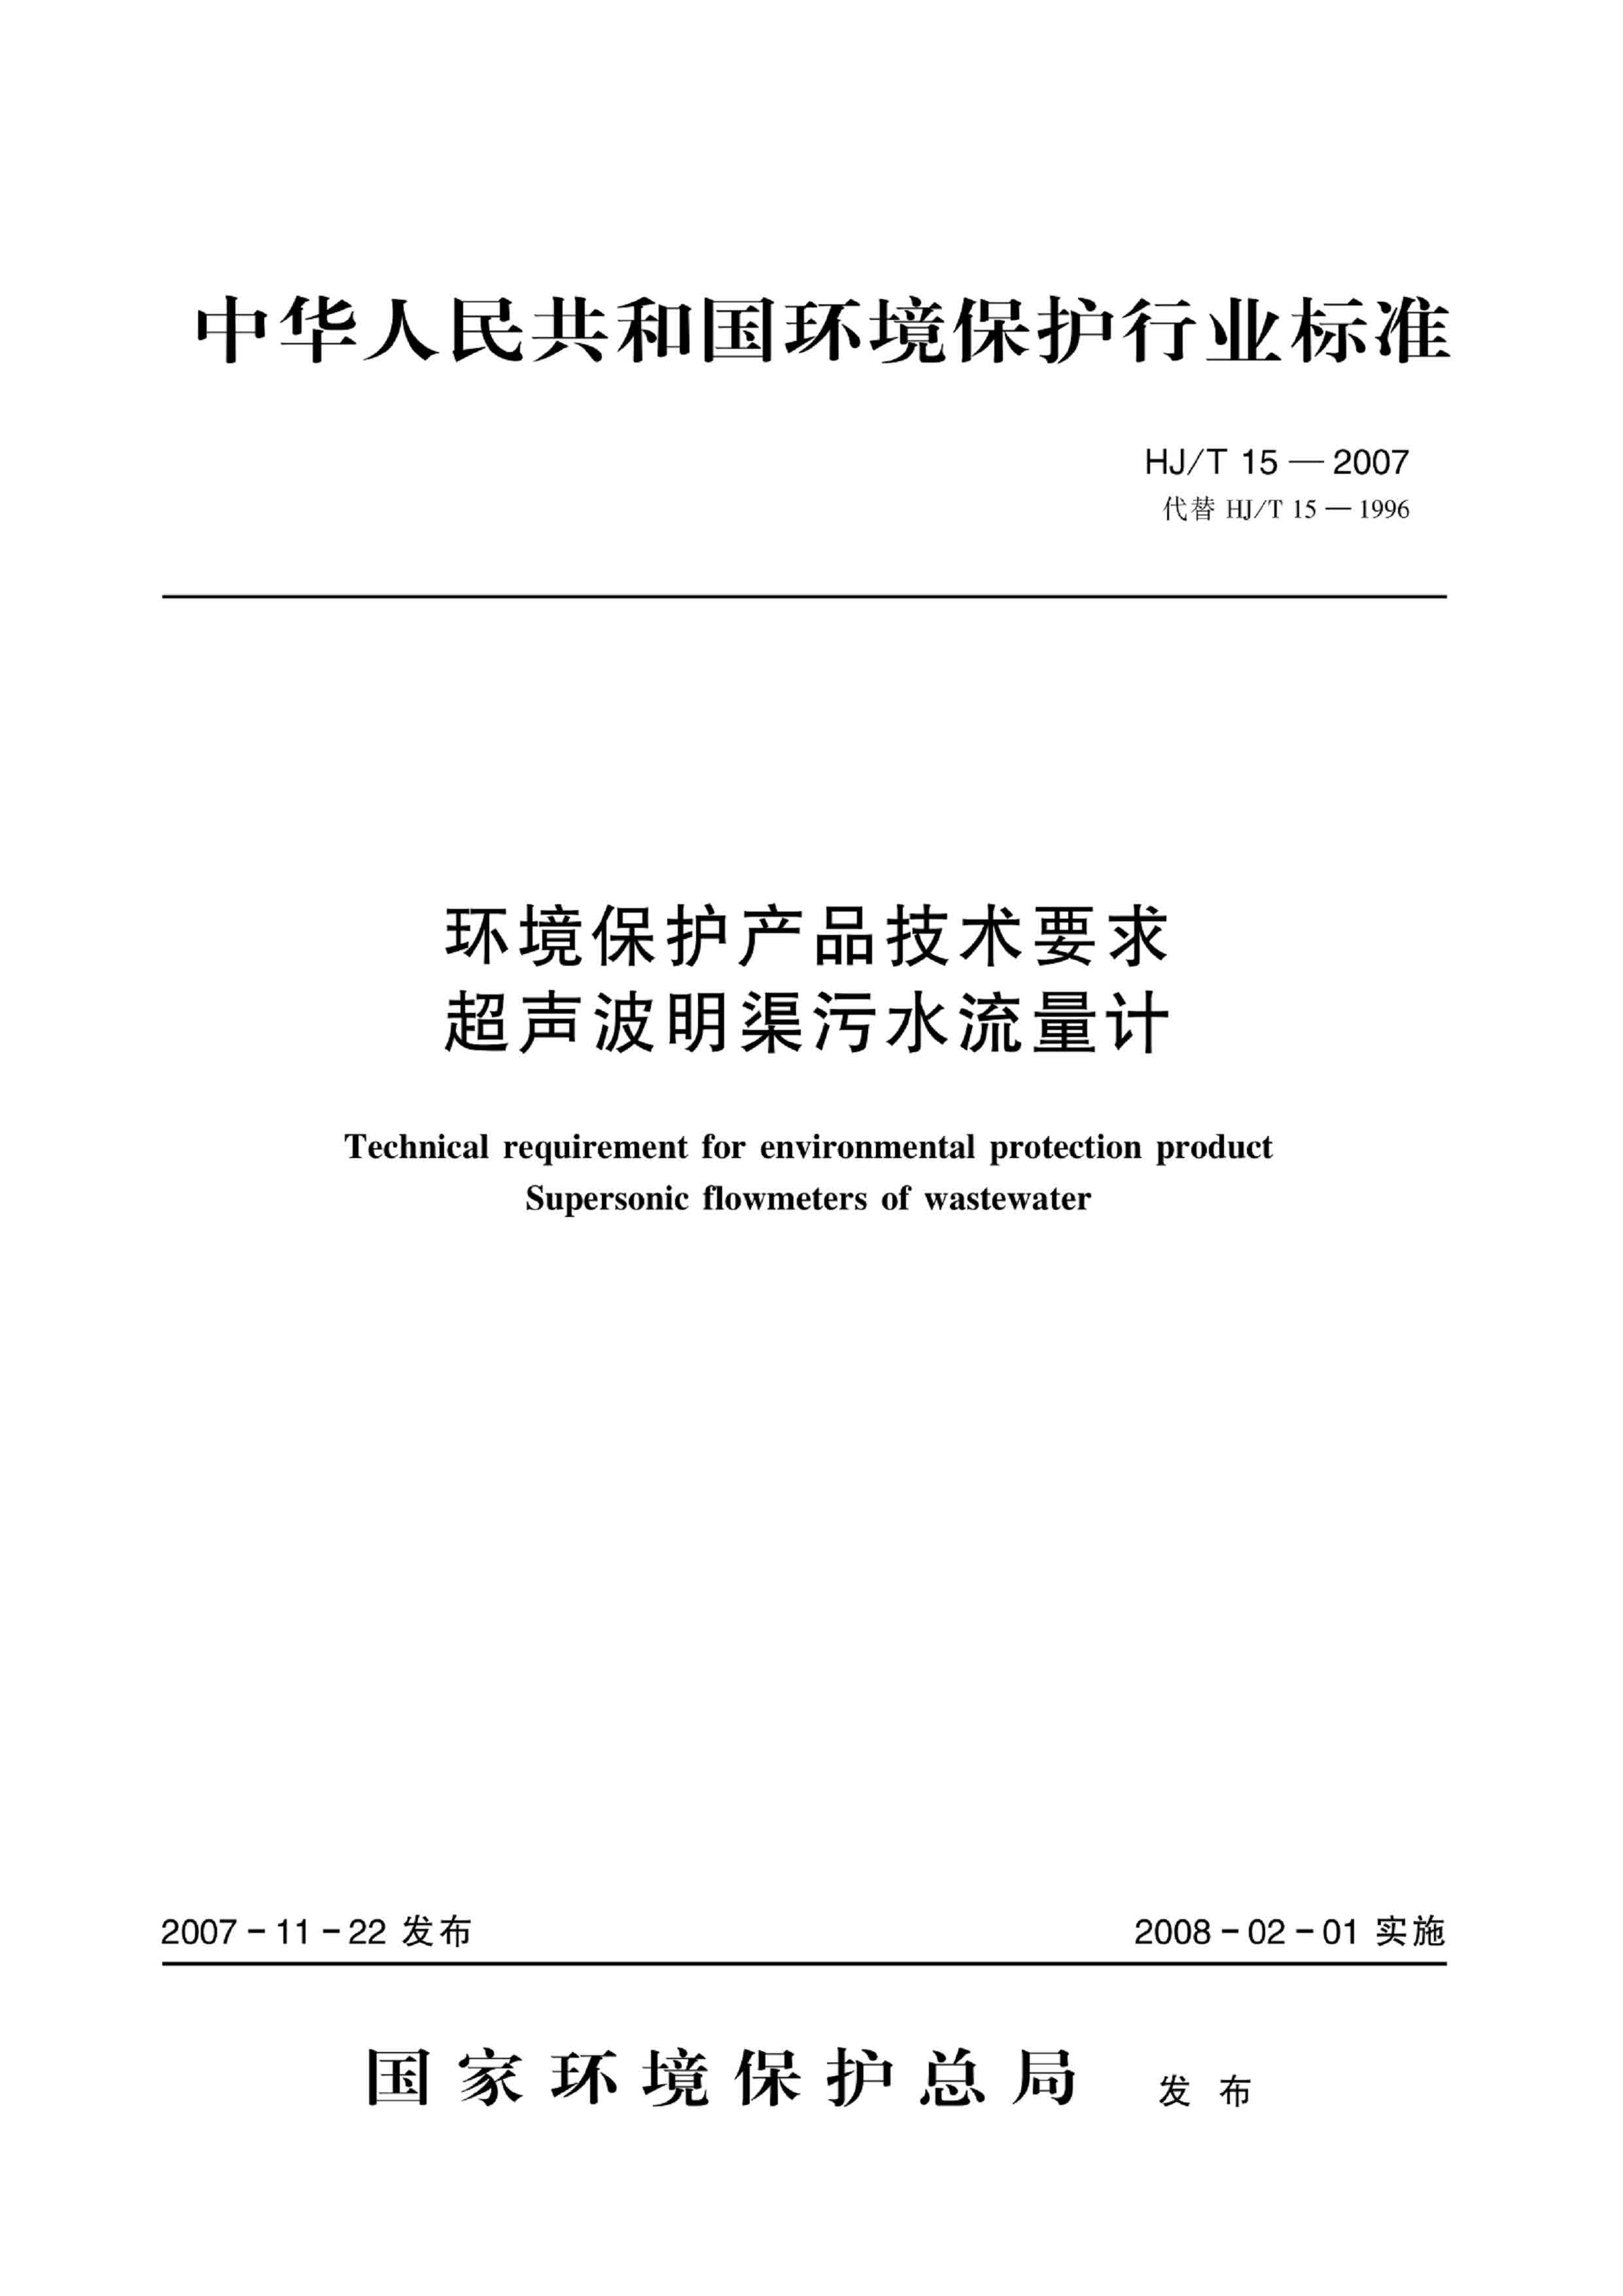 HJ-T15-2007 环境保护产品技术要求　超声波明渠污水流量计 下载（19新版已出）